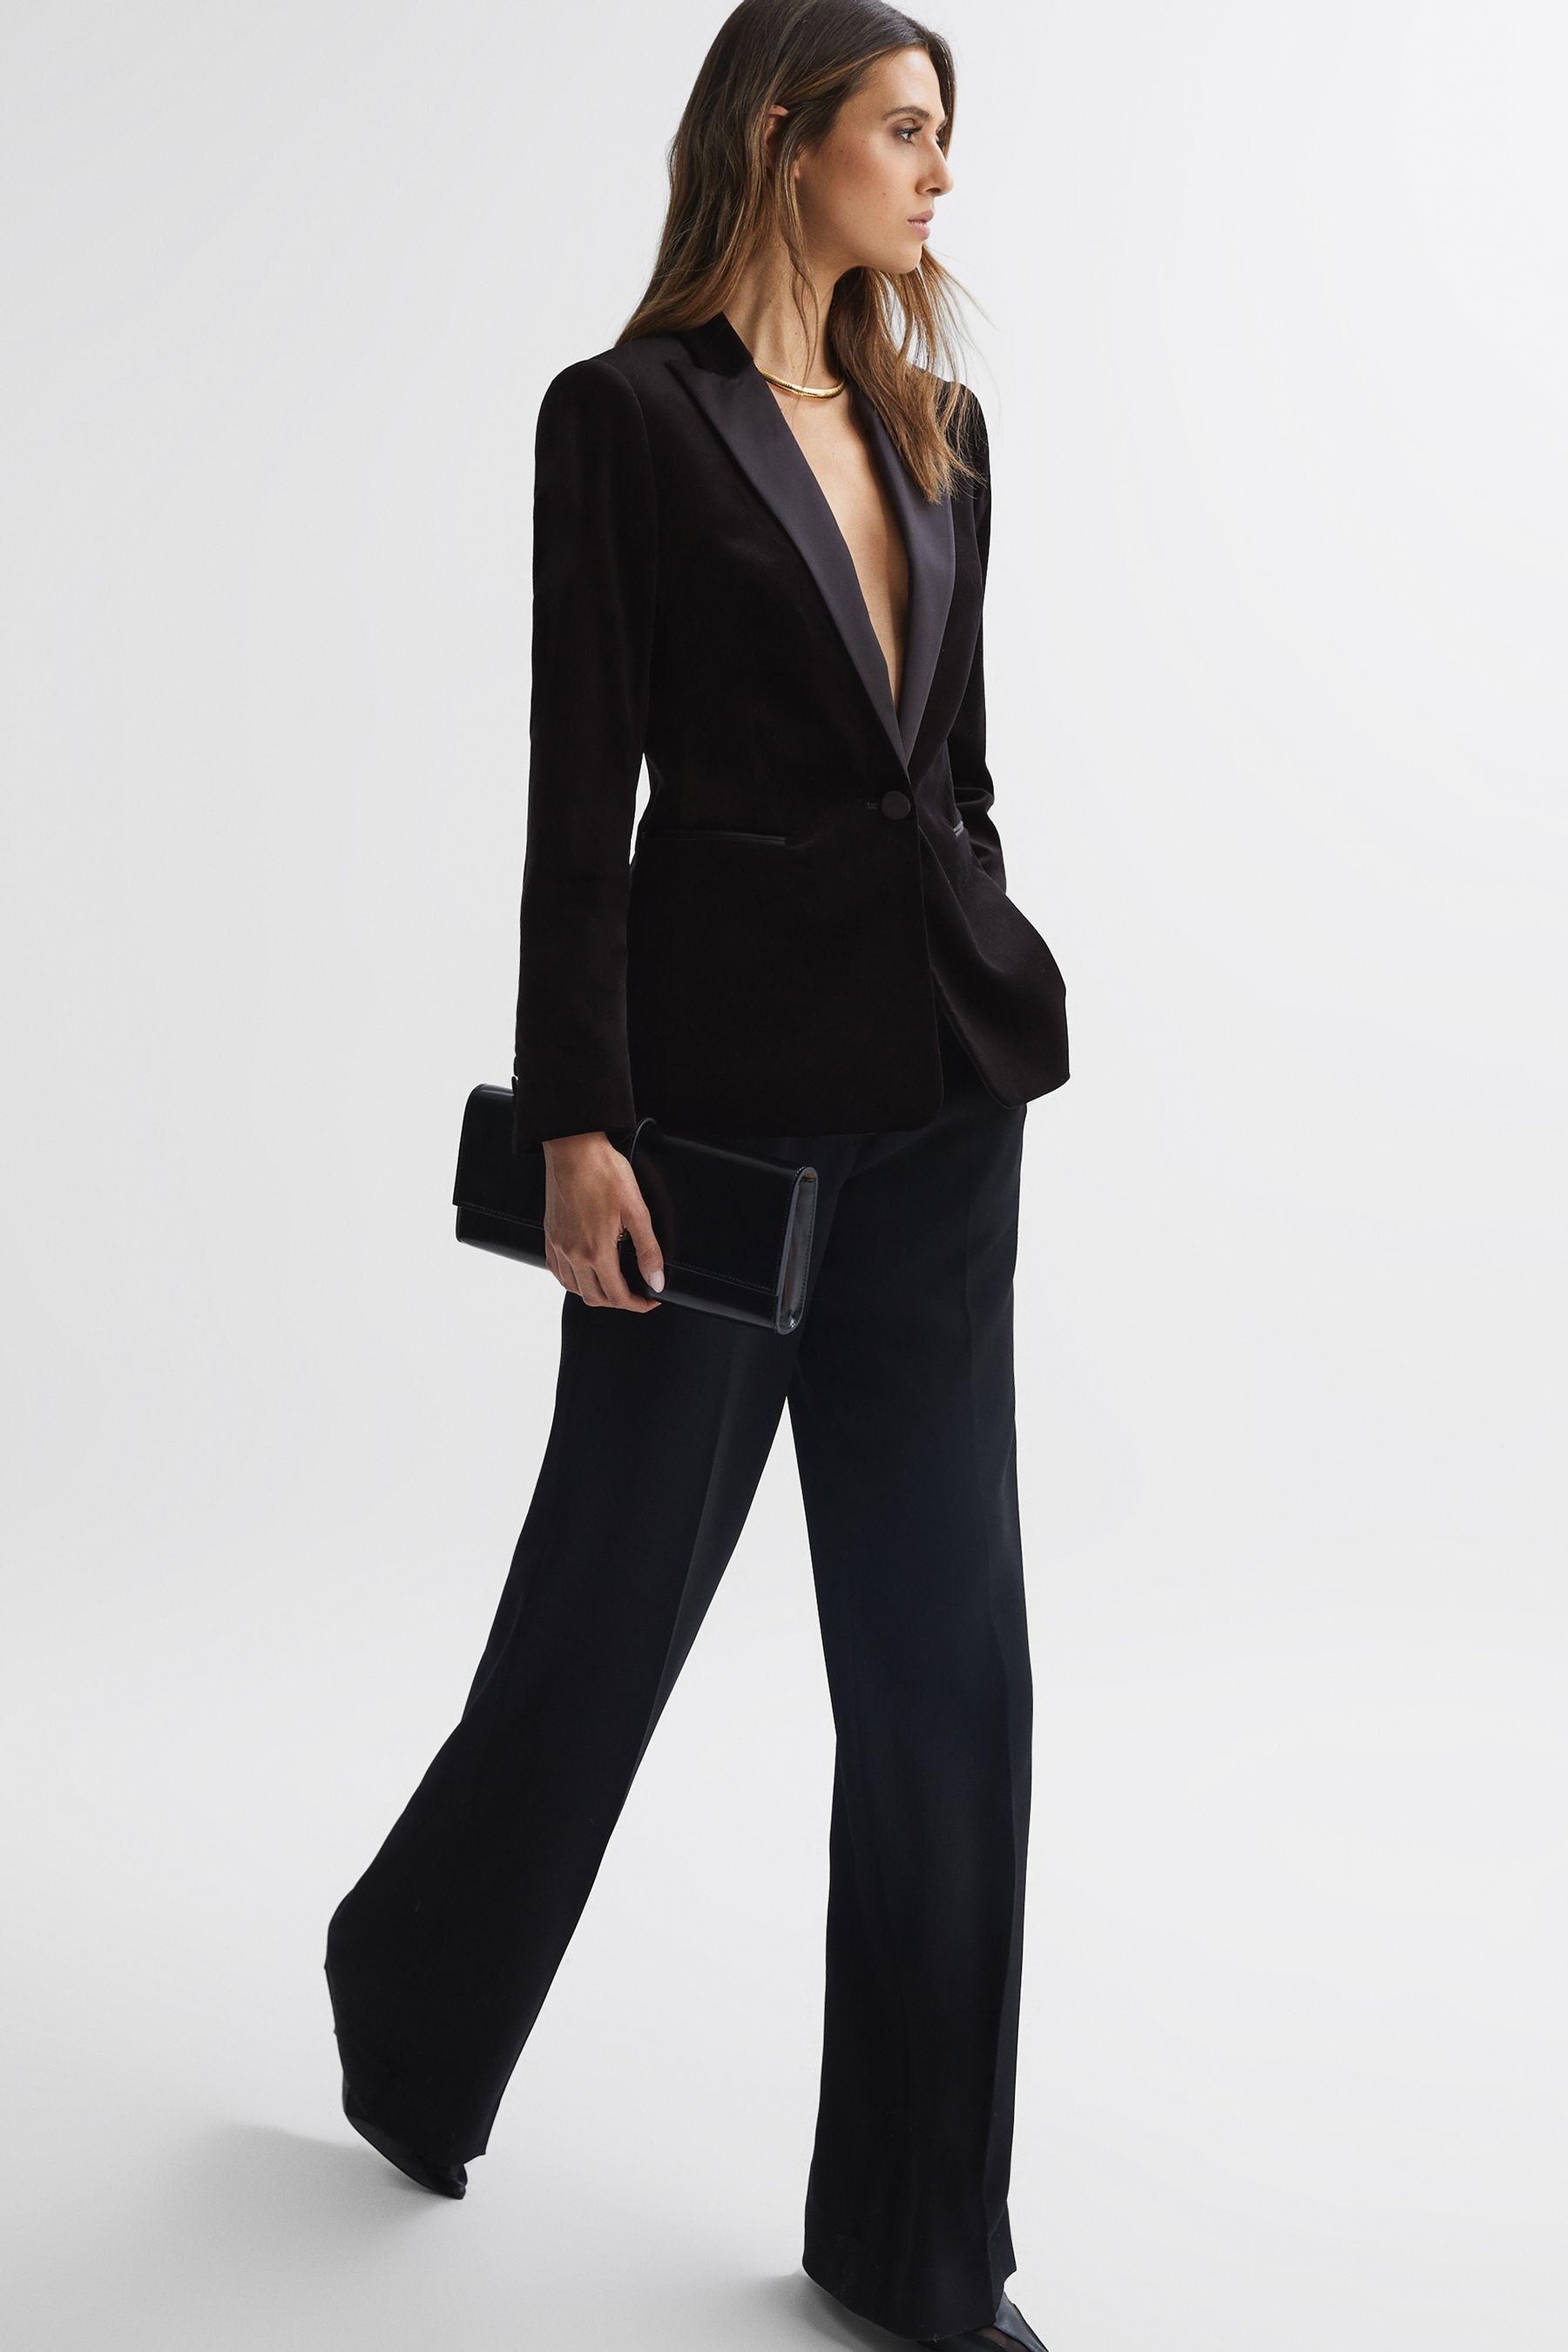 Reiss Opal - Black Fitted Velvet Single Breasted Suit Blazer, Us 2